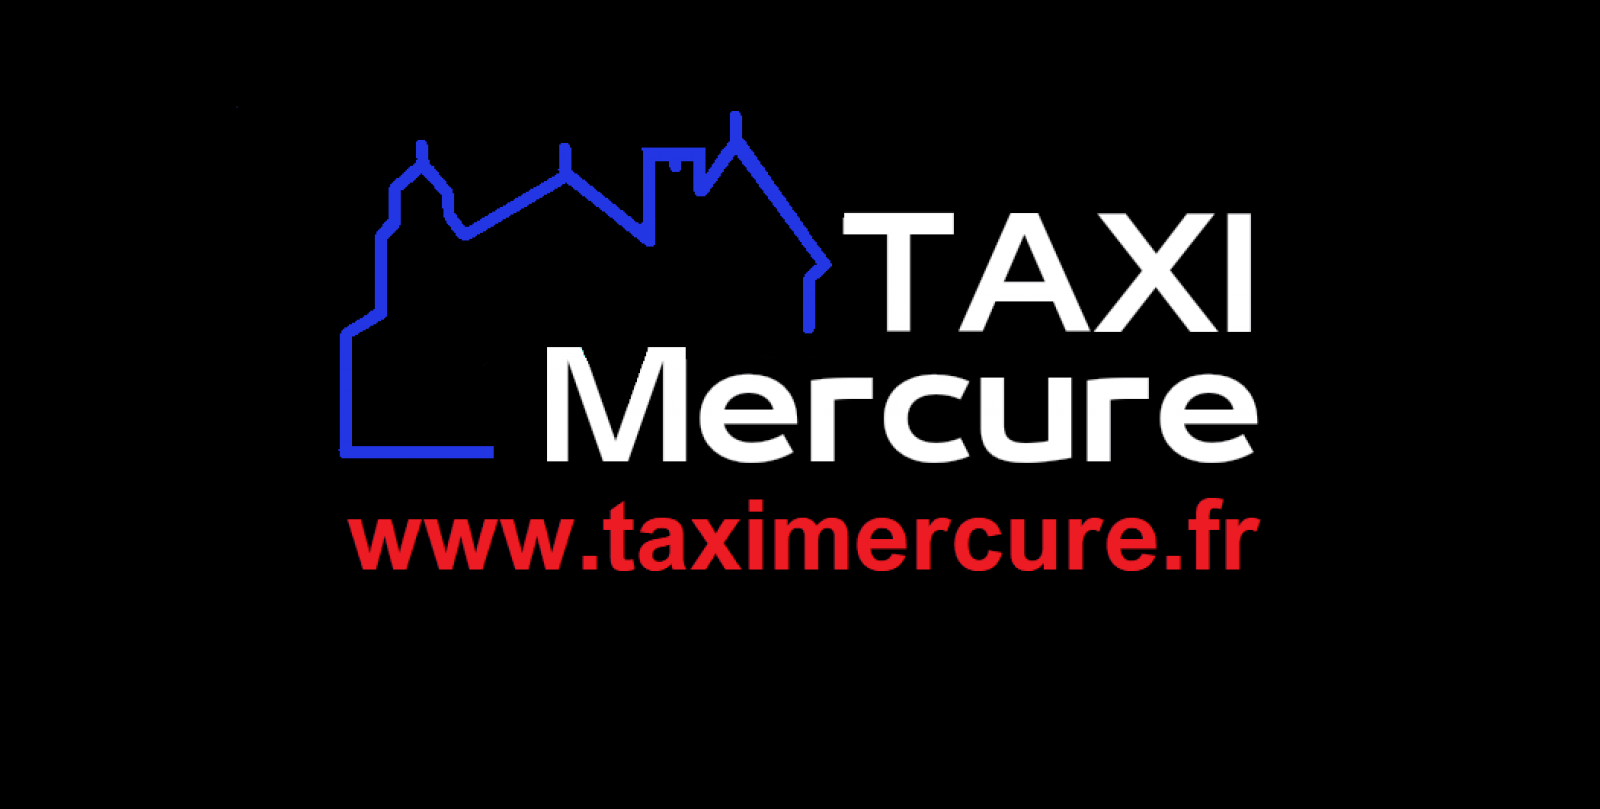 Taxi mercure